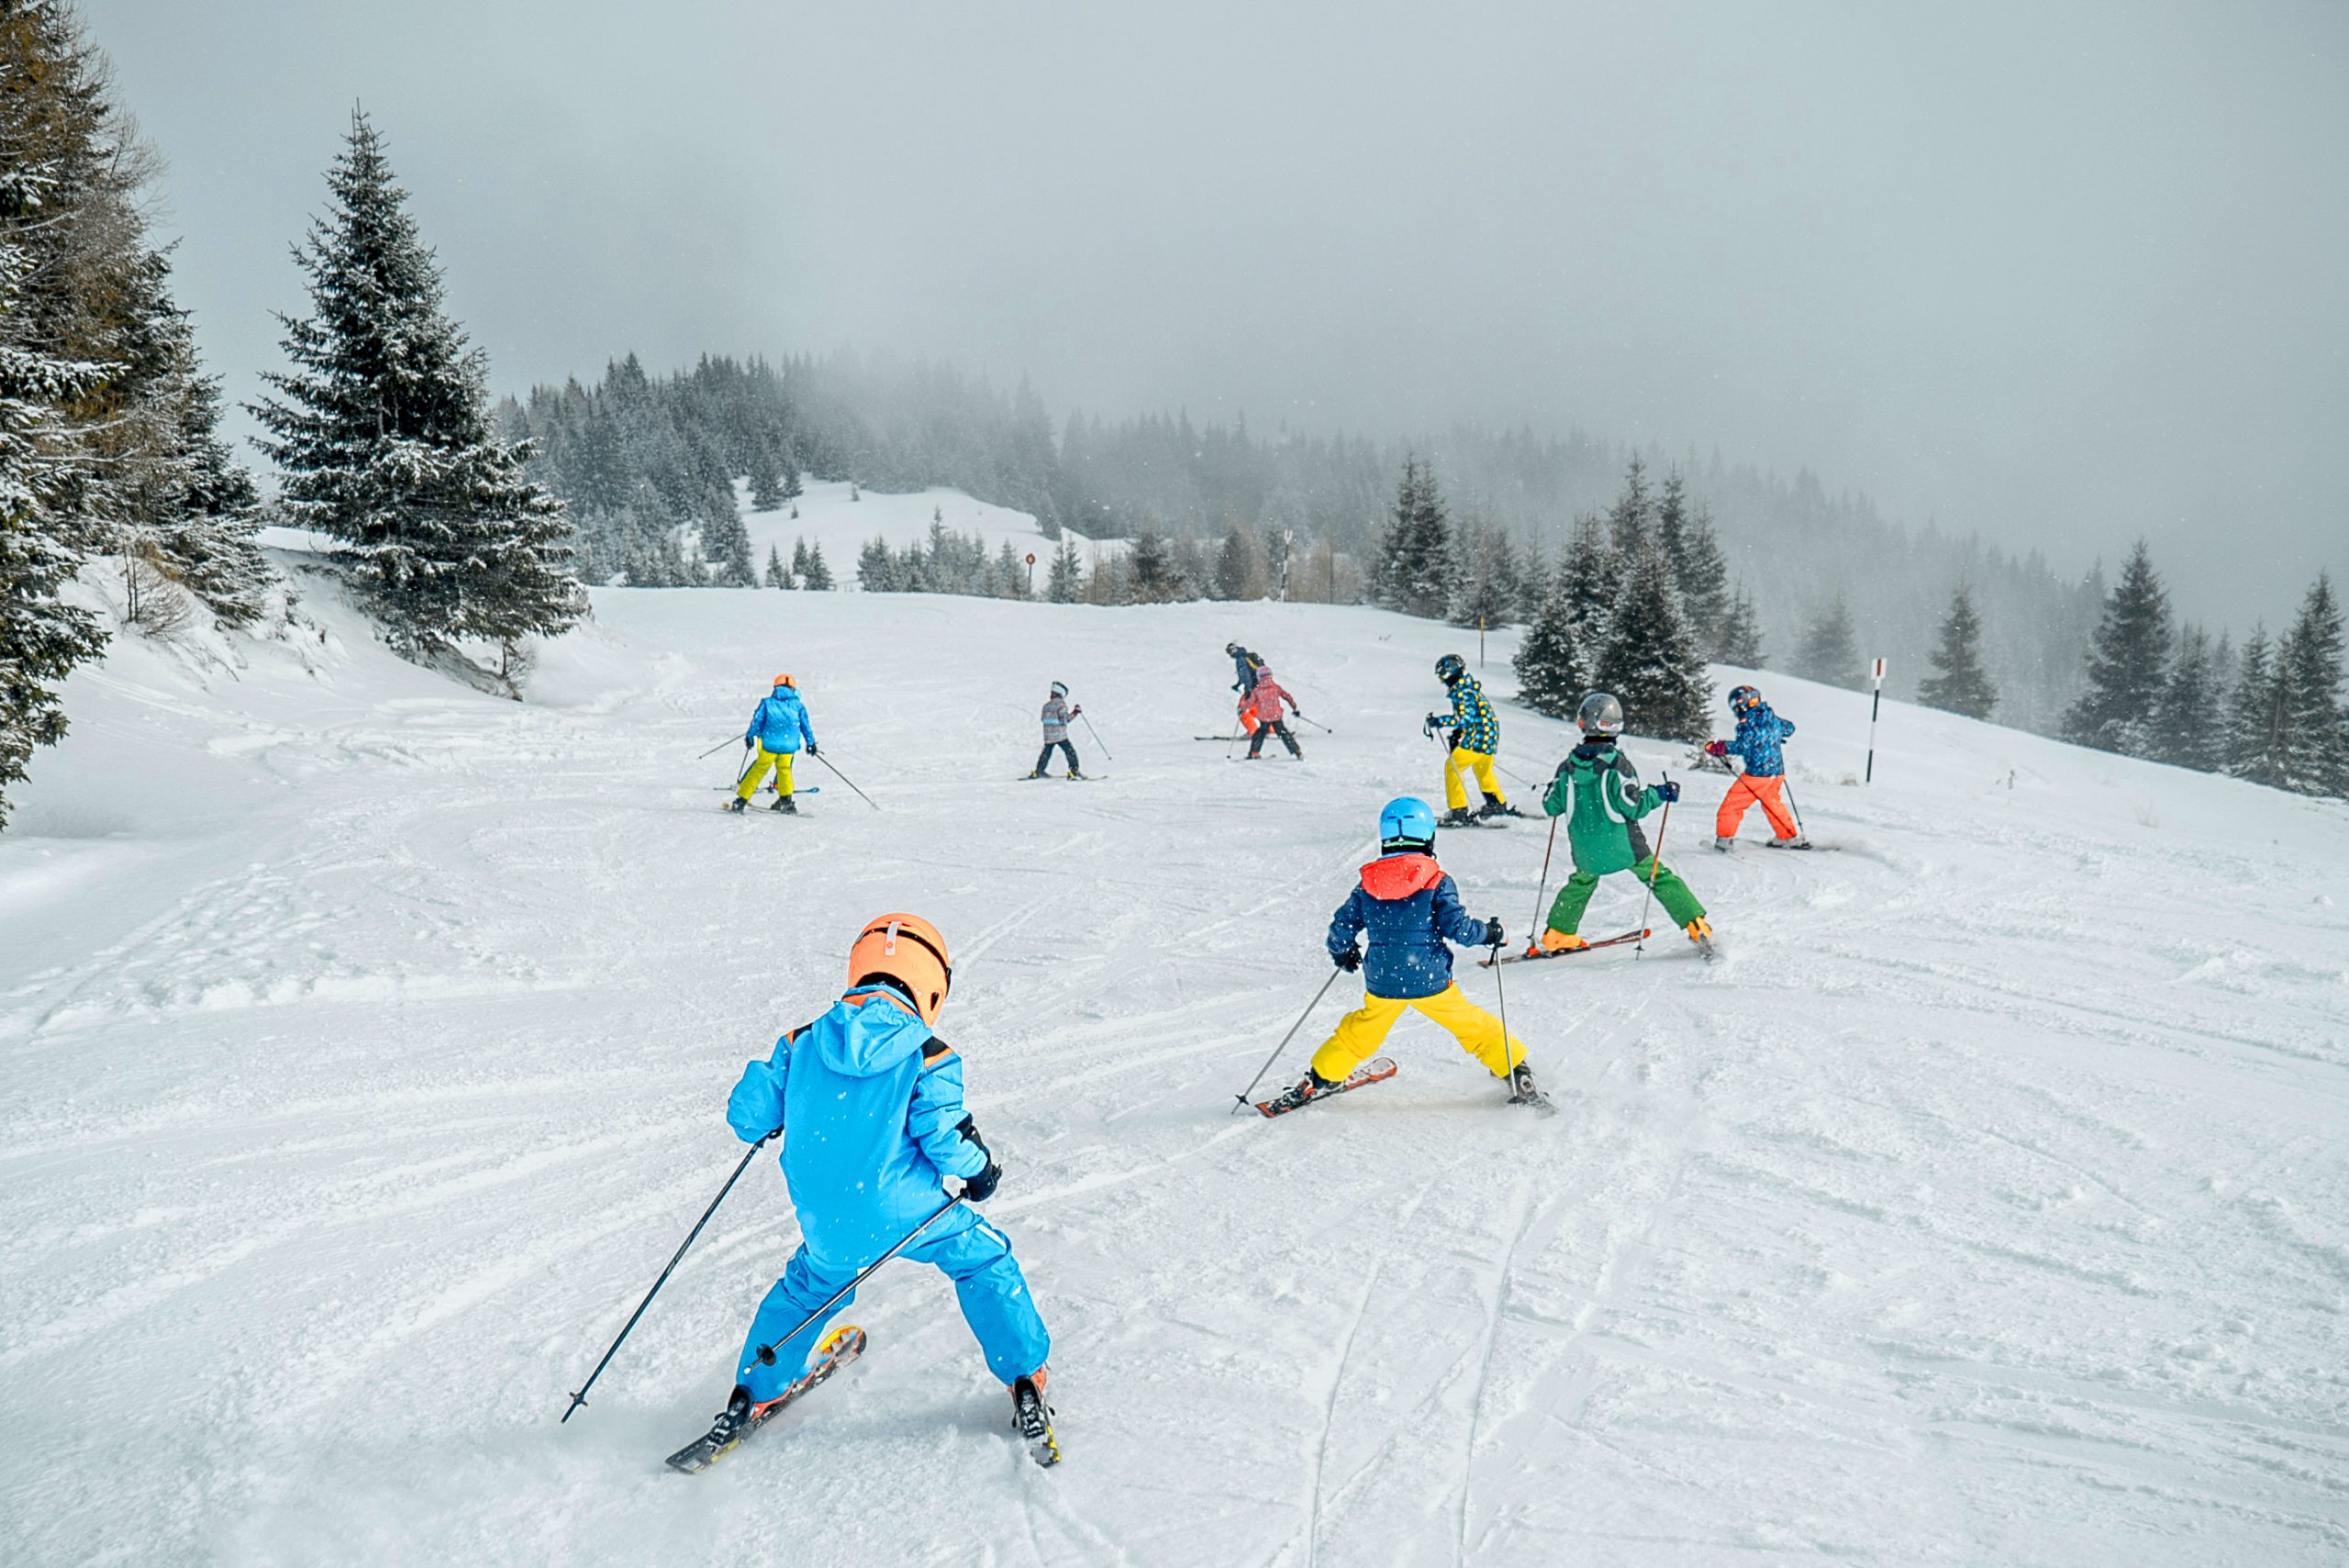 Ski lesson for kids on a snowy peak